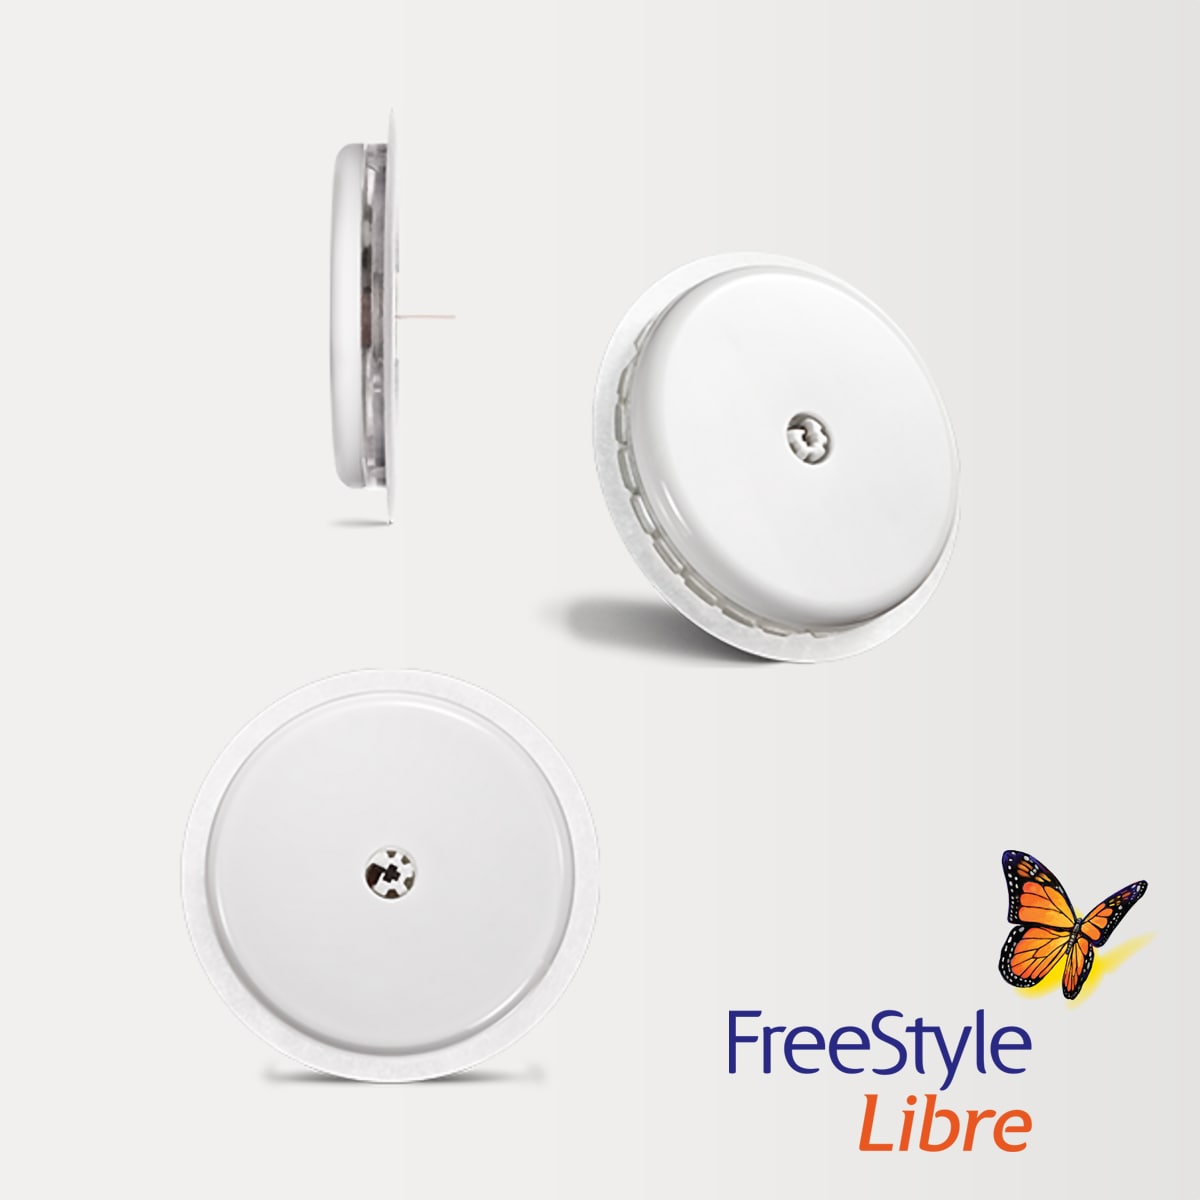 FreeStyle Libre 2 sensors, Abbott